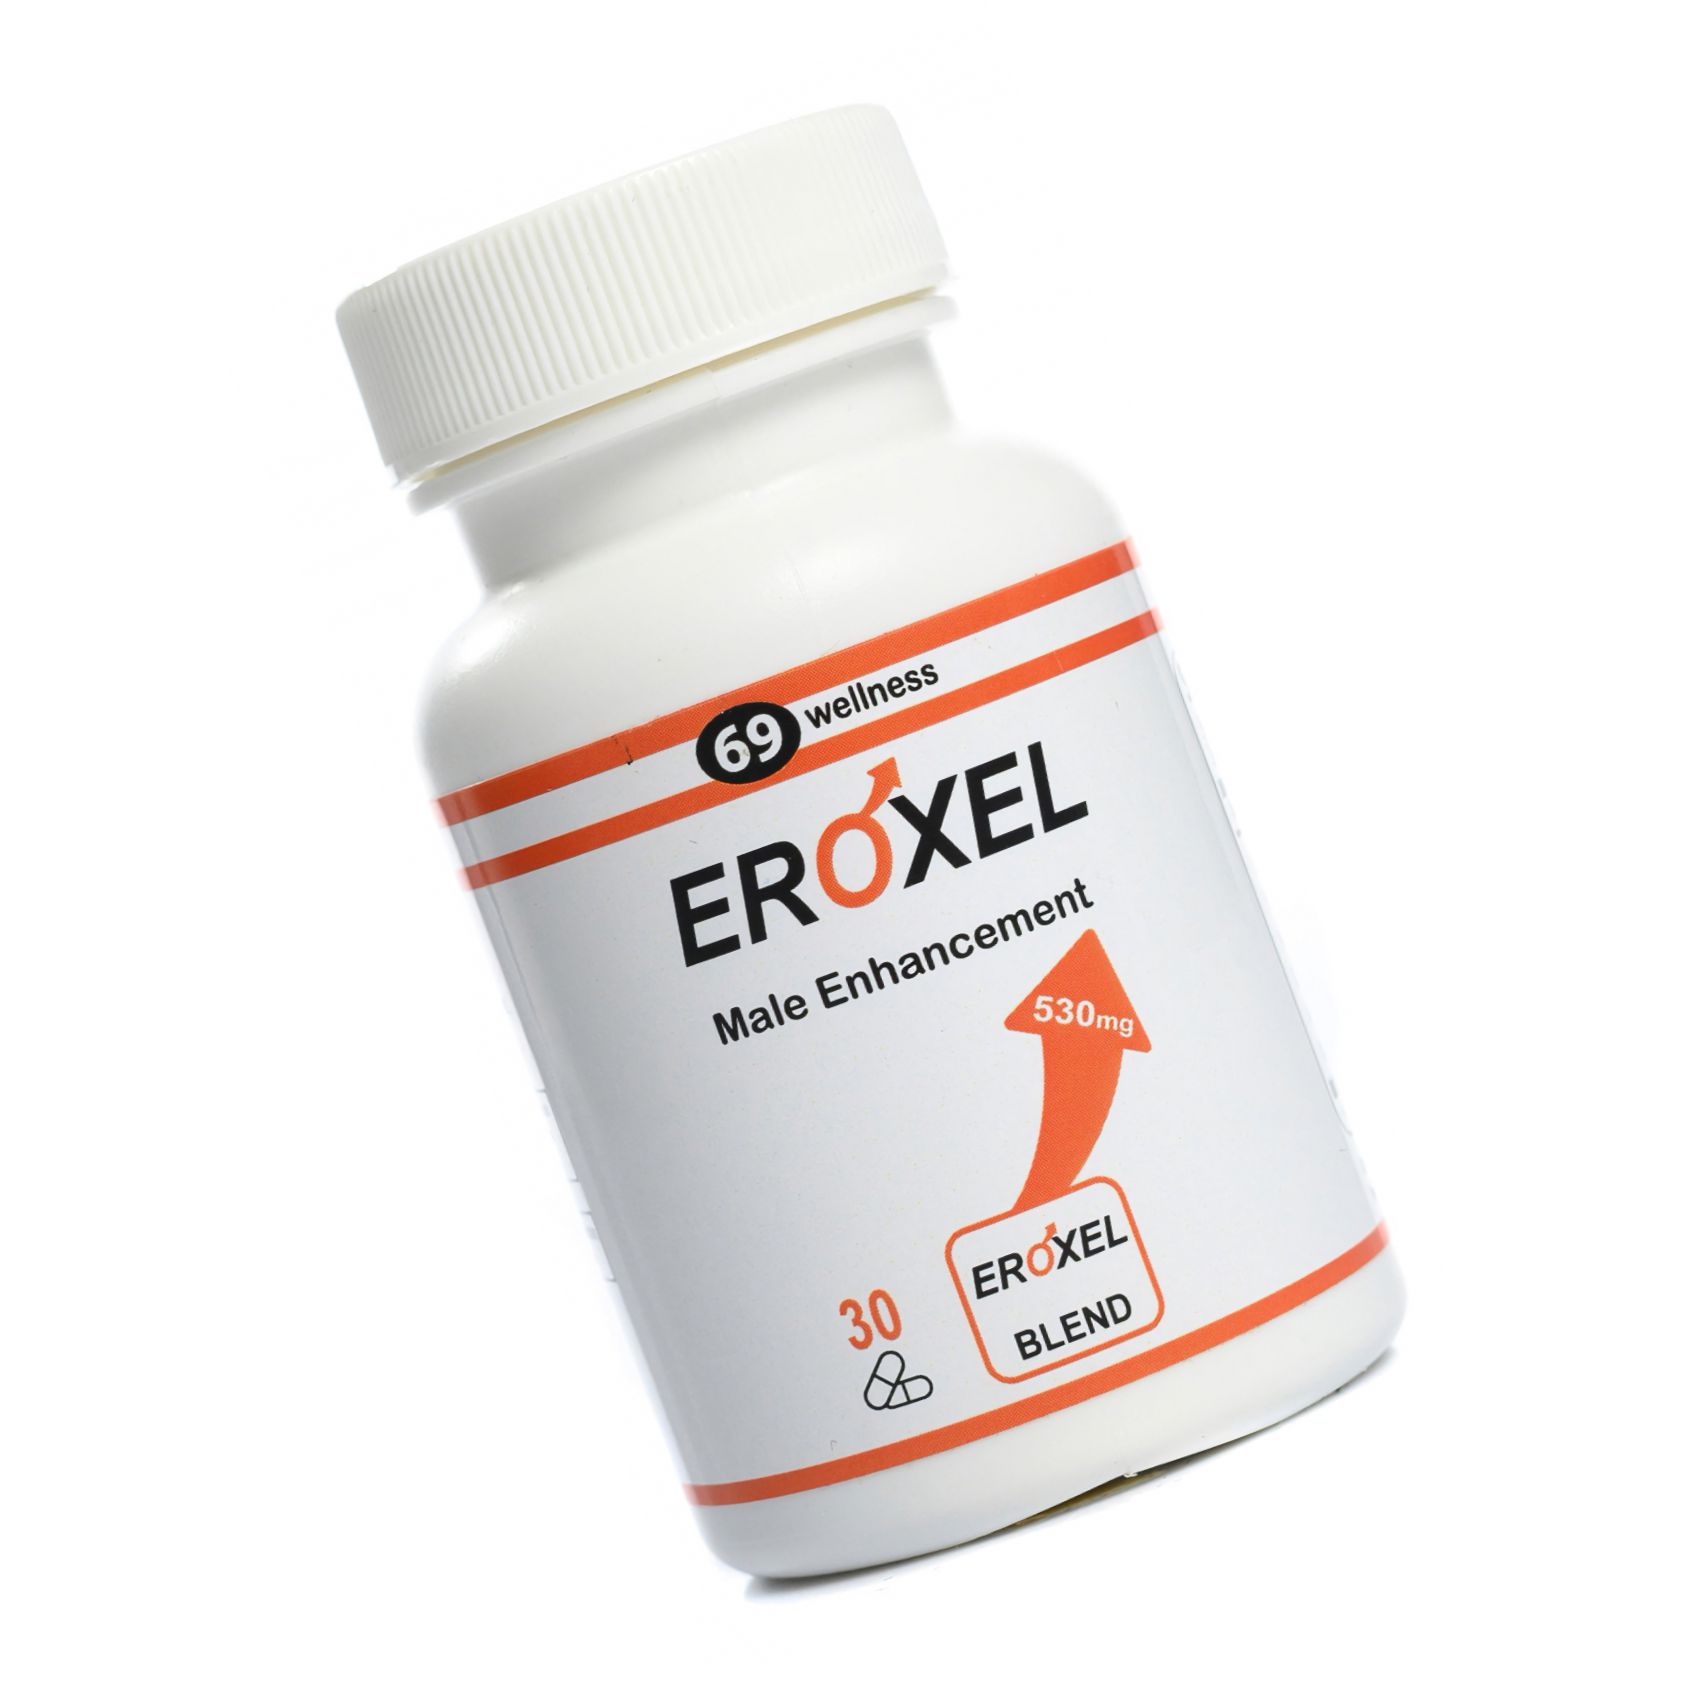 Eroxel Male Enhancement